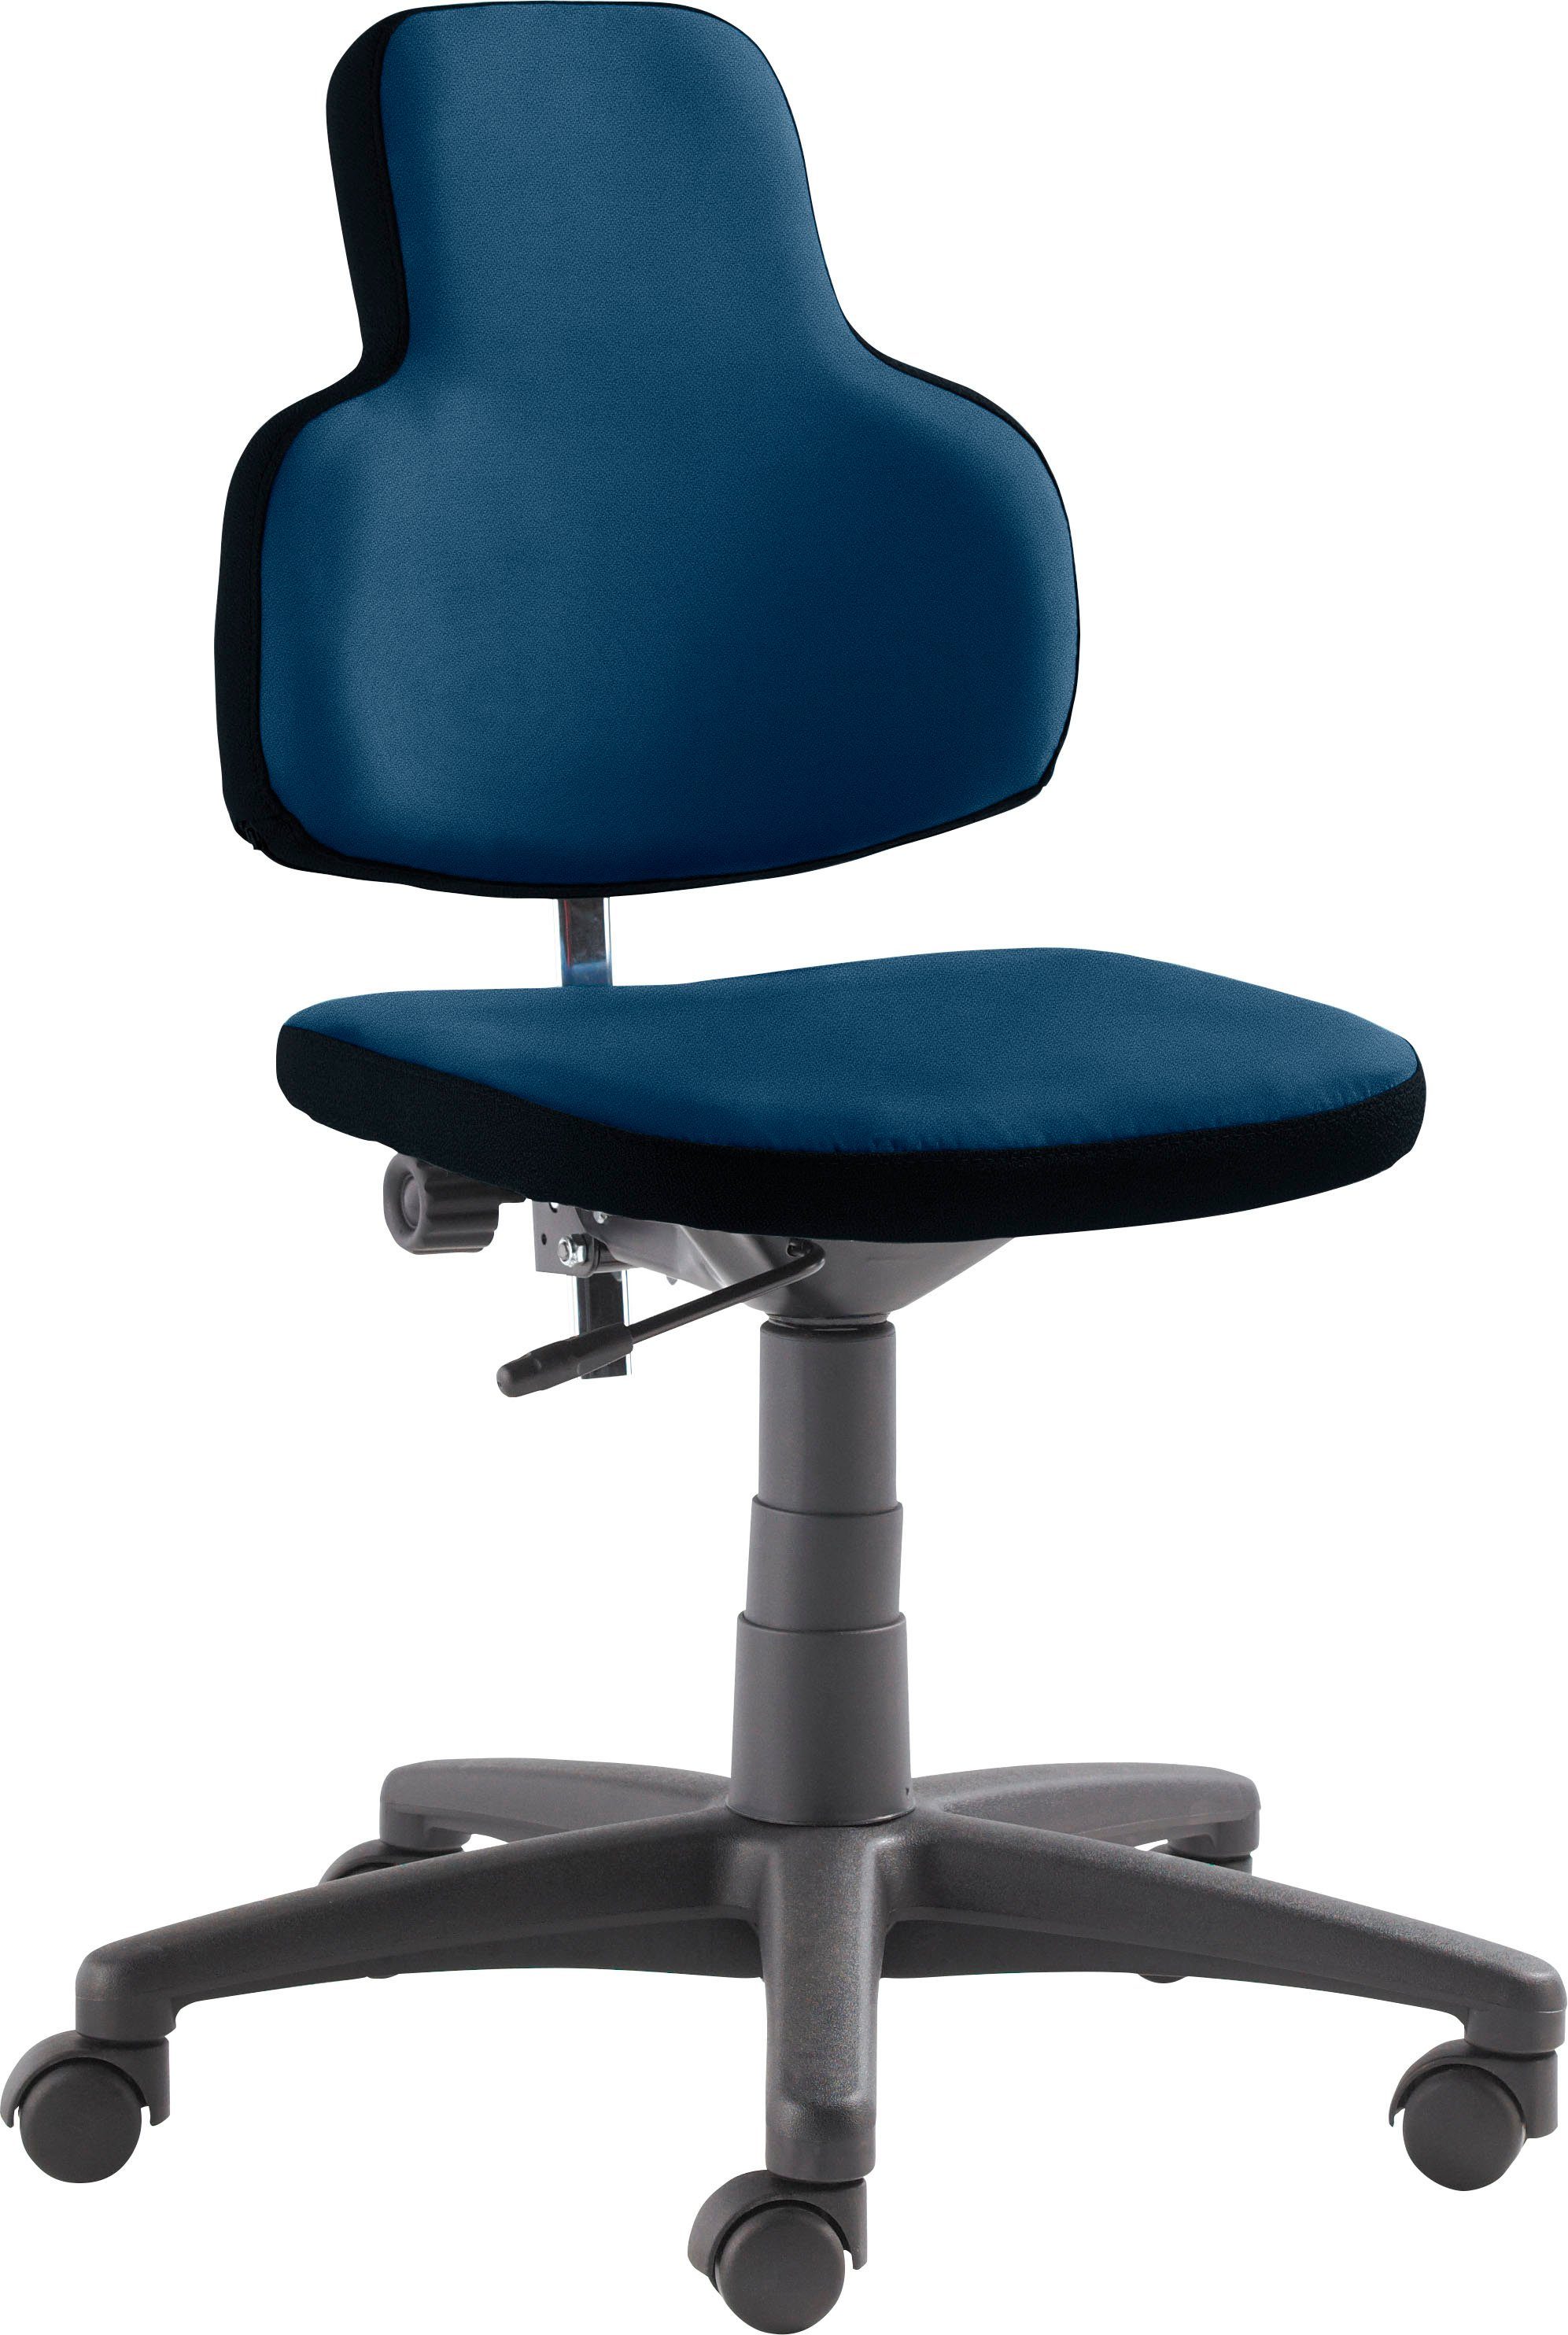 | Mayer Bürostuhl Kinderdrehstuhl dunkelblau/schwarz mitwachsend Dunkelblau myONE, Sitzmöbel